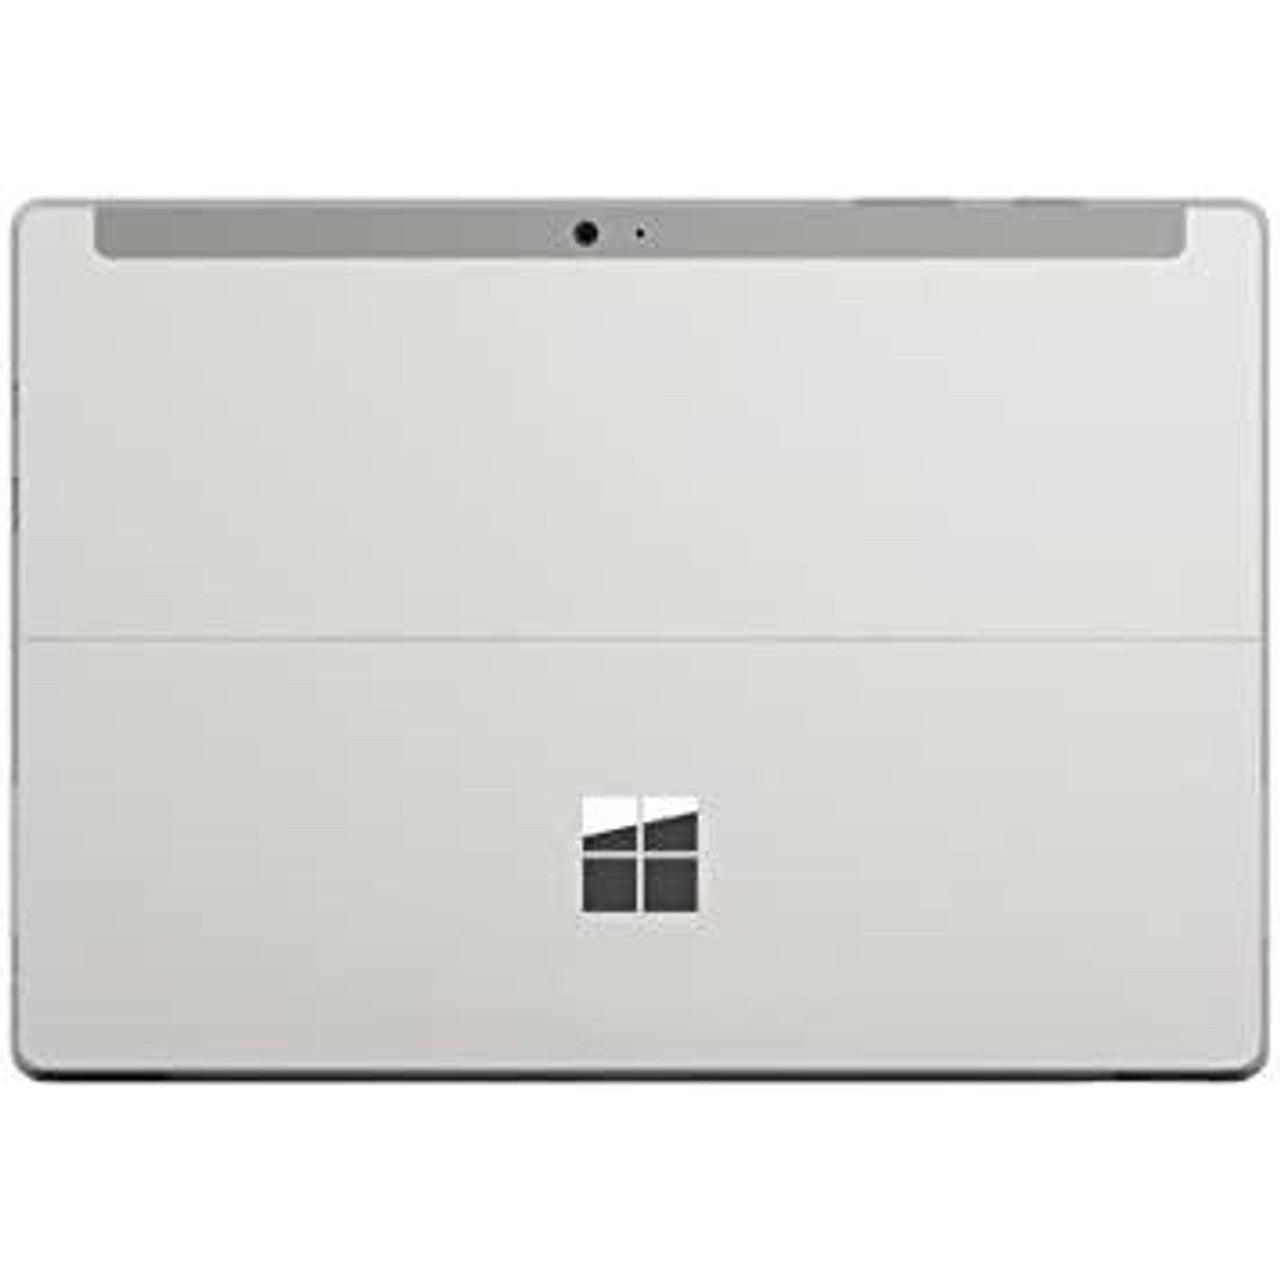 Microsoft Surface 3 Tablet Intel X7 2GB RAM 64GB SSD 10.5 - Silver